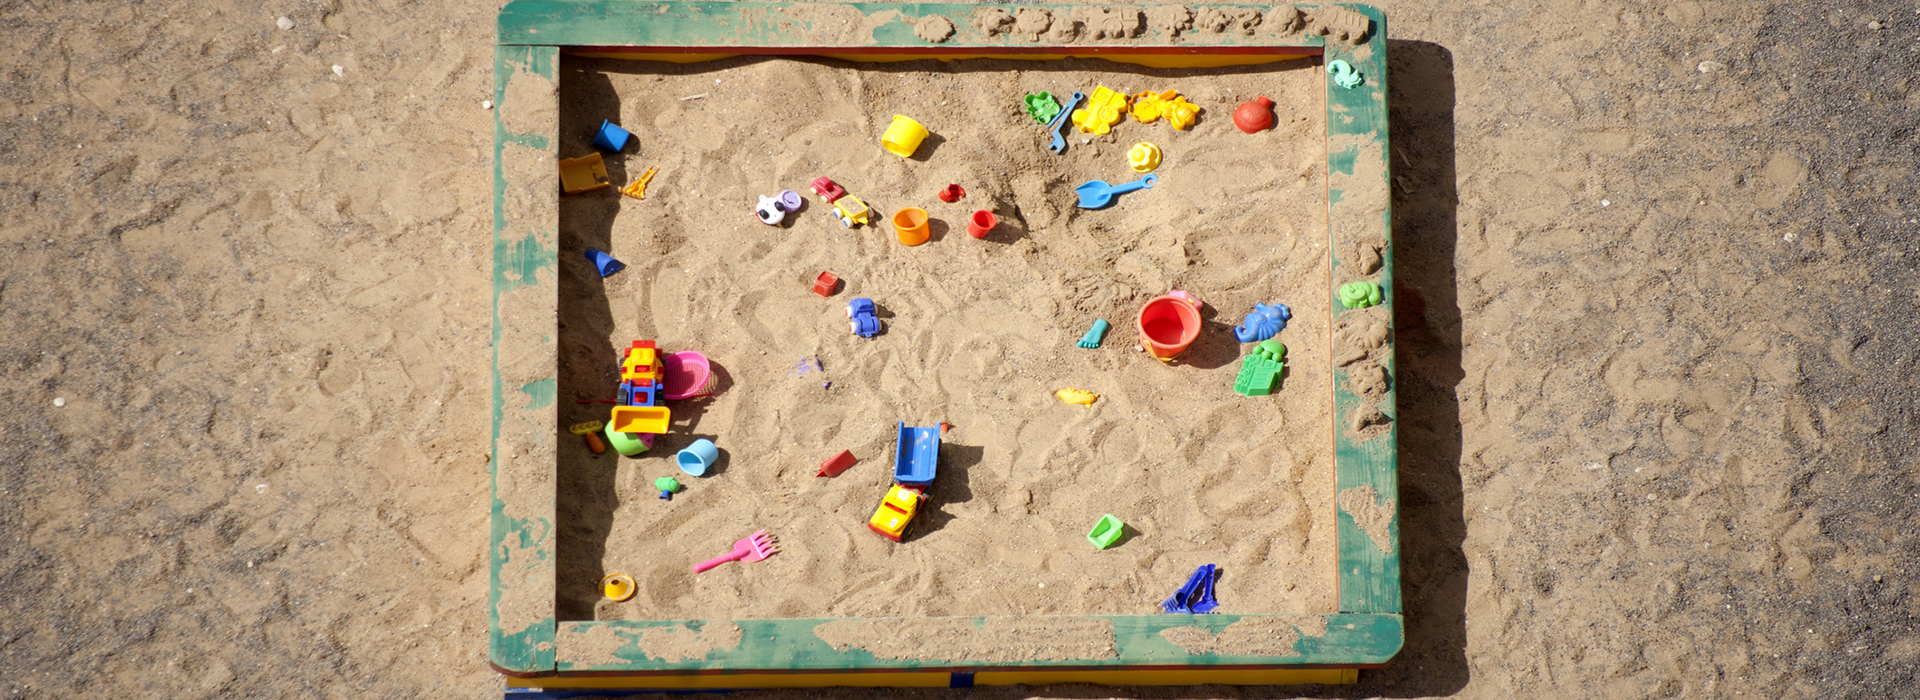 sandbox with toys